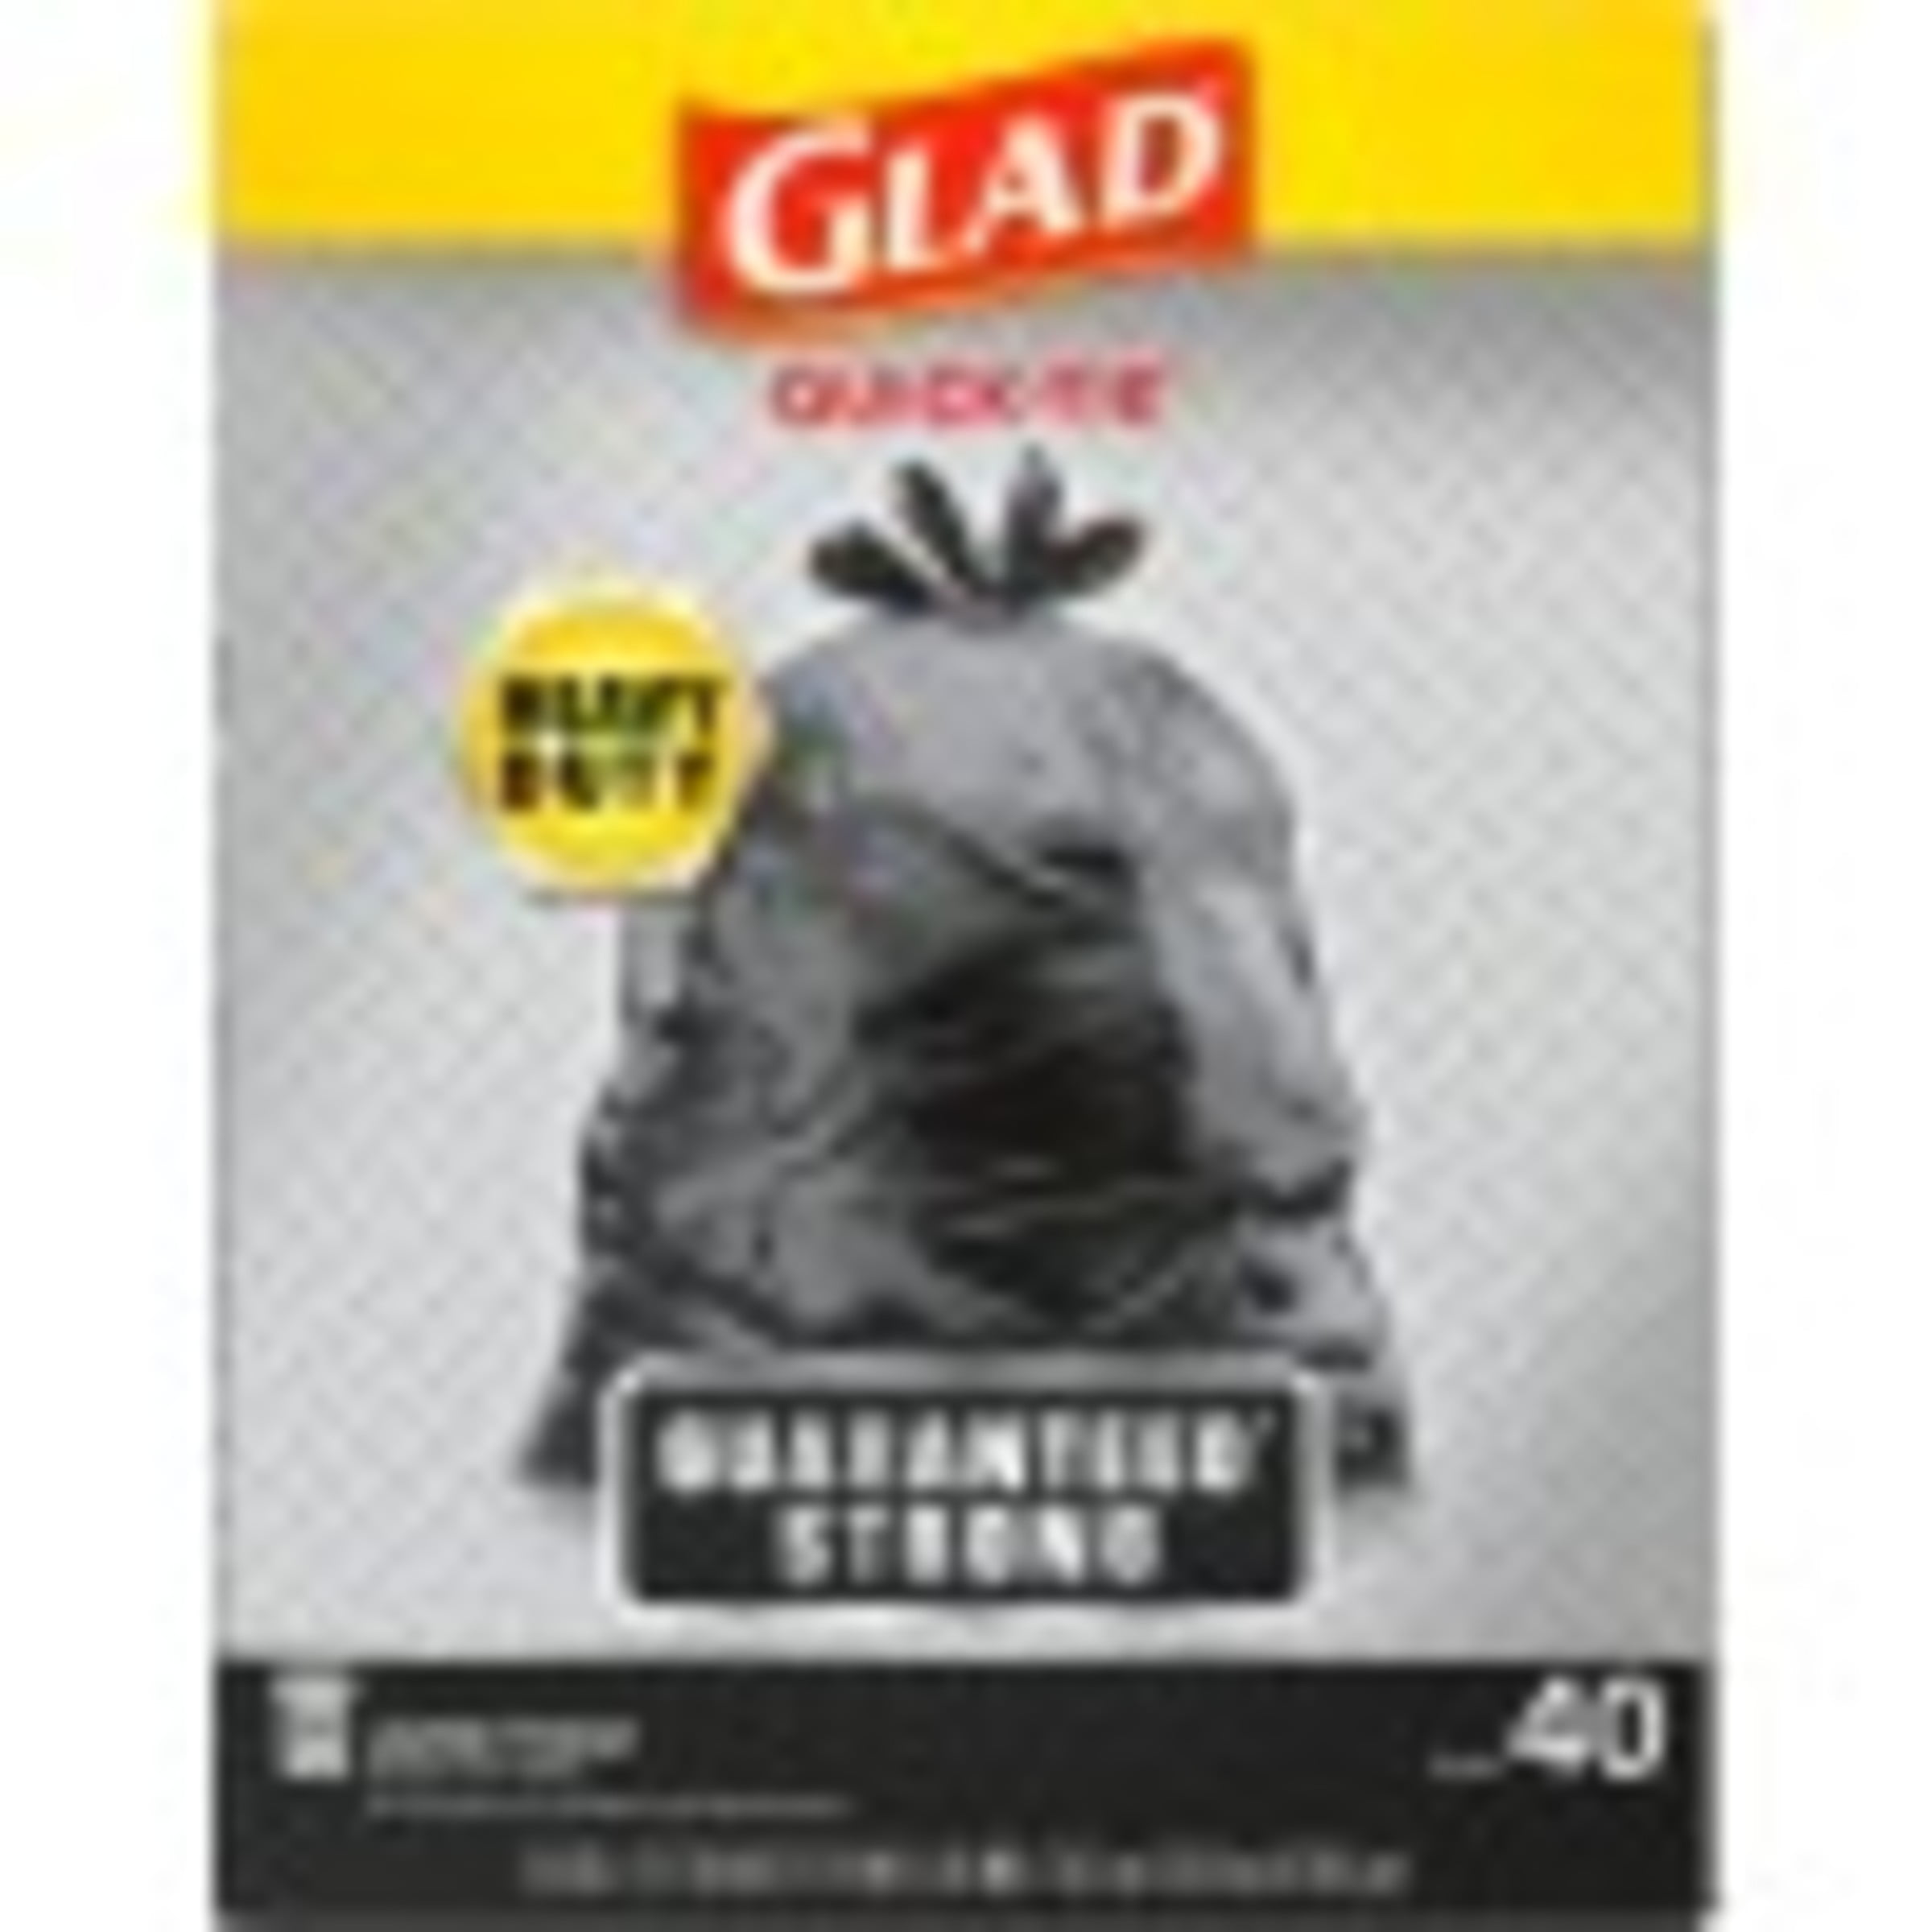 Glad Large Drawstring Trash Bags - Large Size - 30 gal CLO78952PL, CLO  78952PL - Office Supply Hut